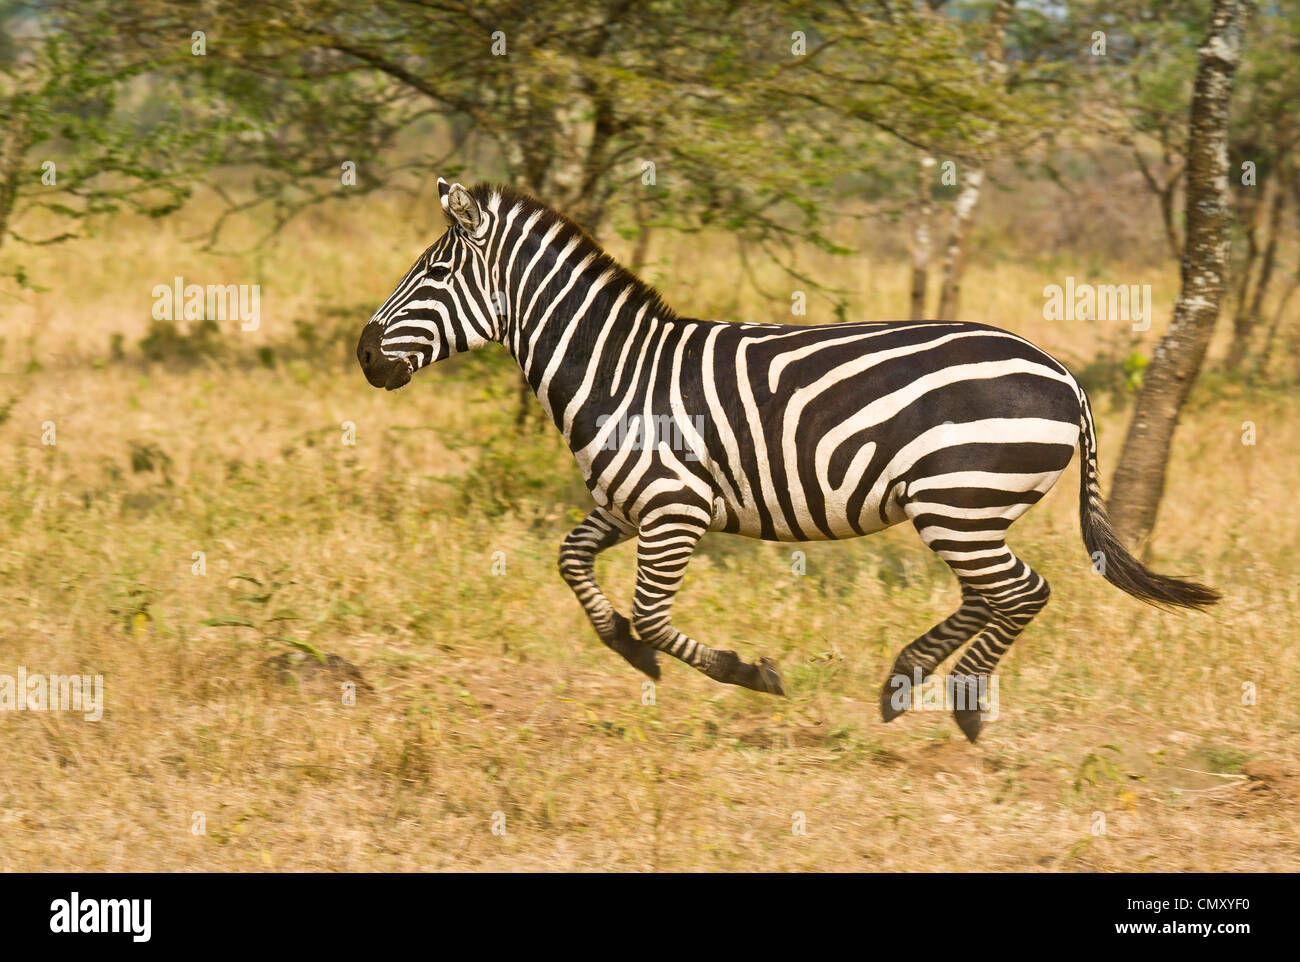 Zebra running full gallop on the plain Stock Photo - Alamy